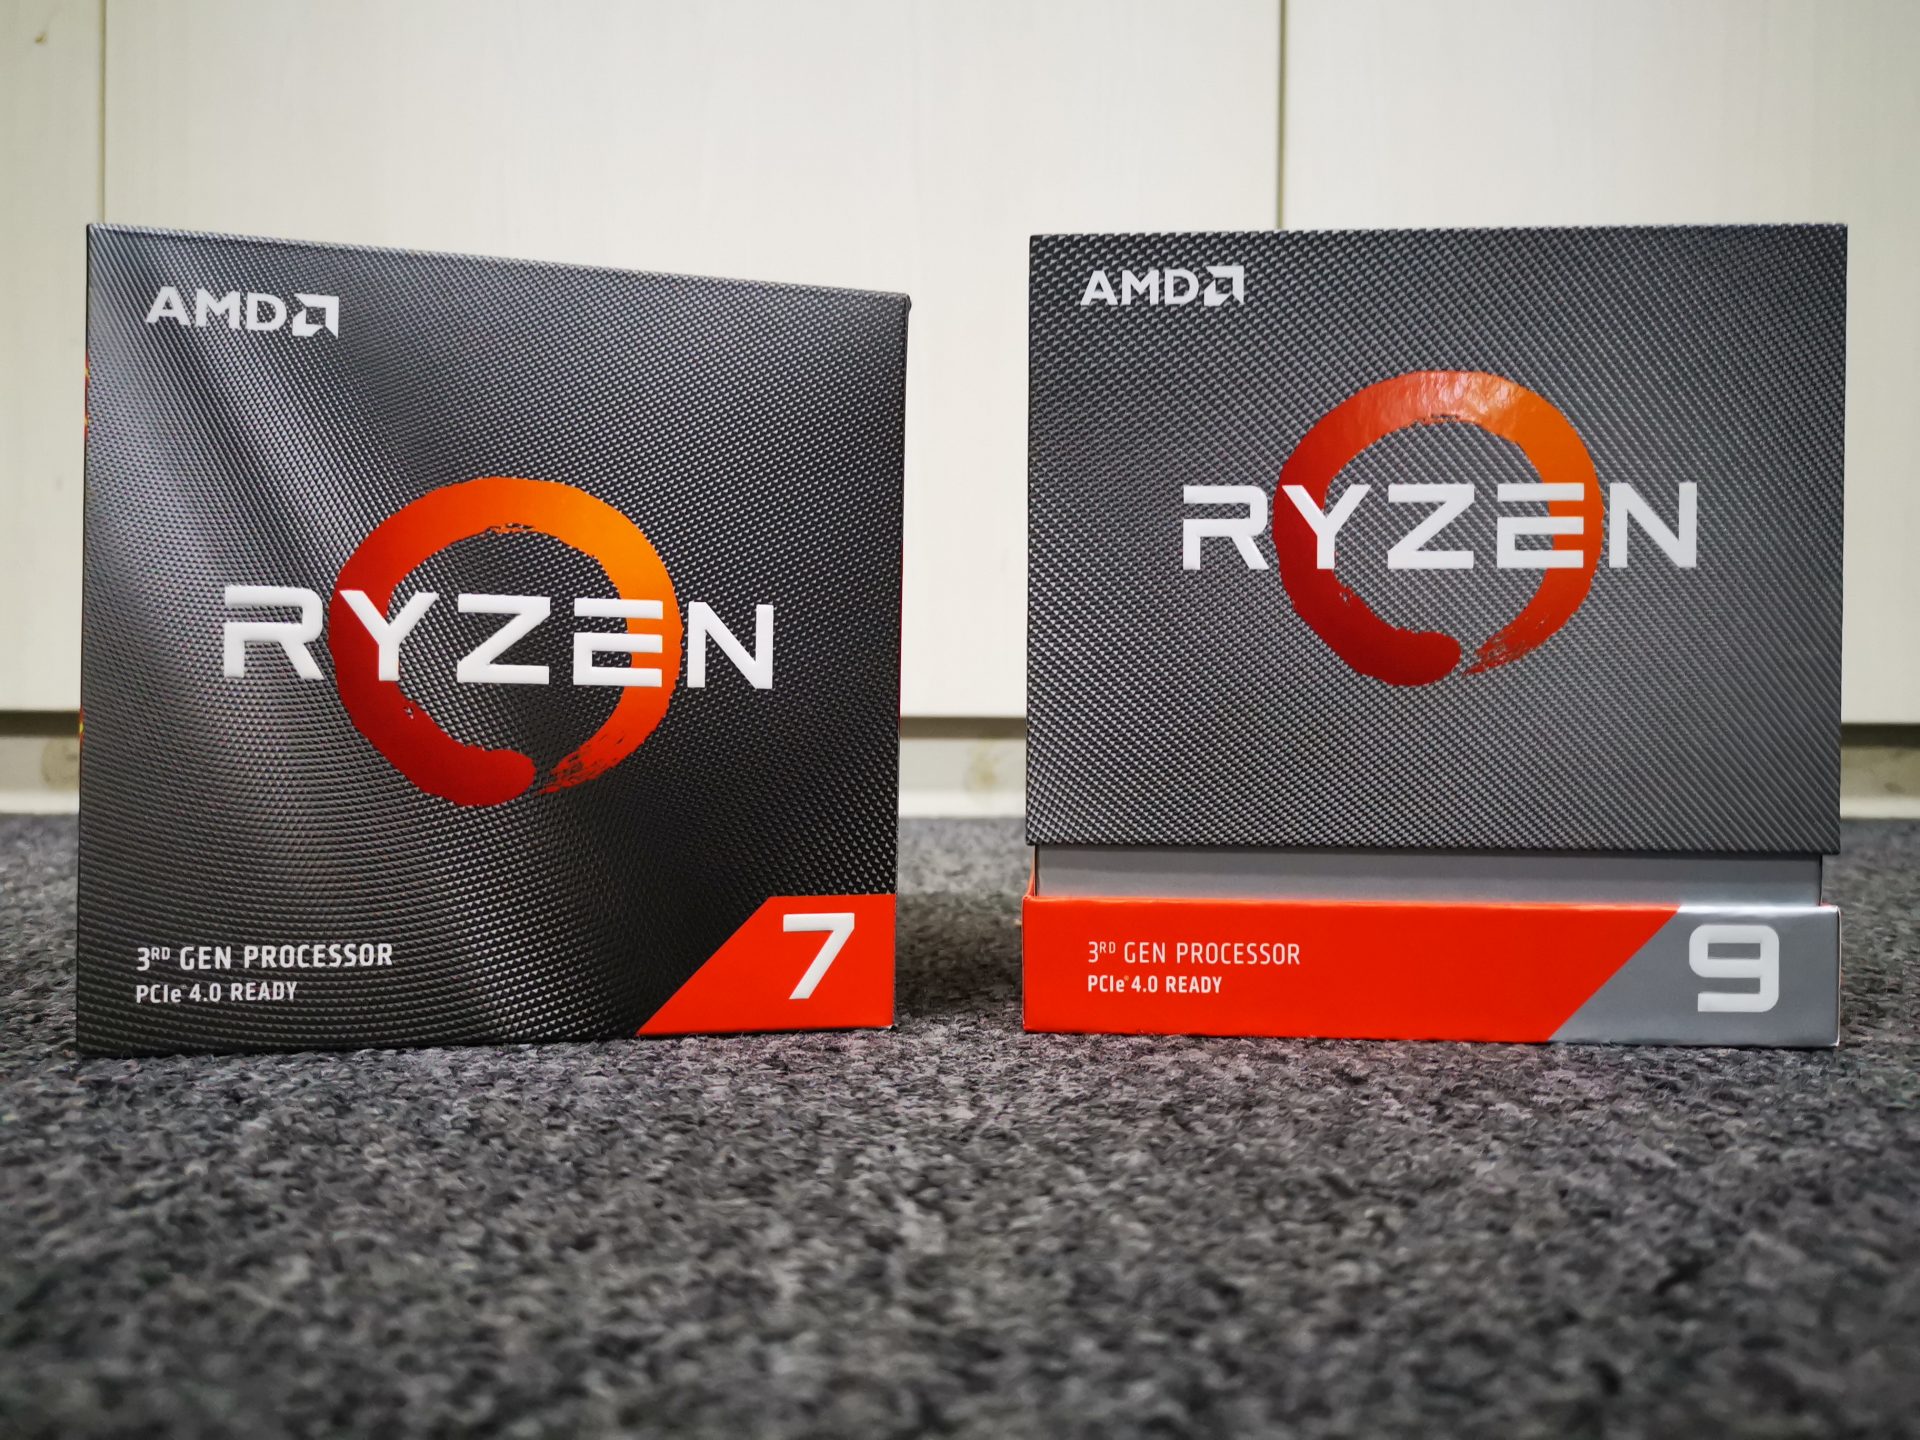 Review of AMD Ryzen 7 3700X and Ryzen 9 3900X - Best Consumer CPUs of